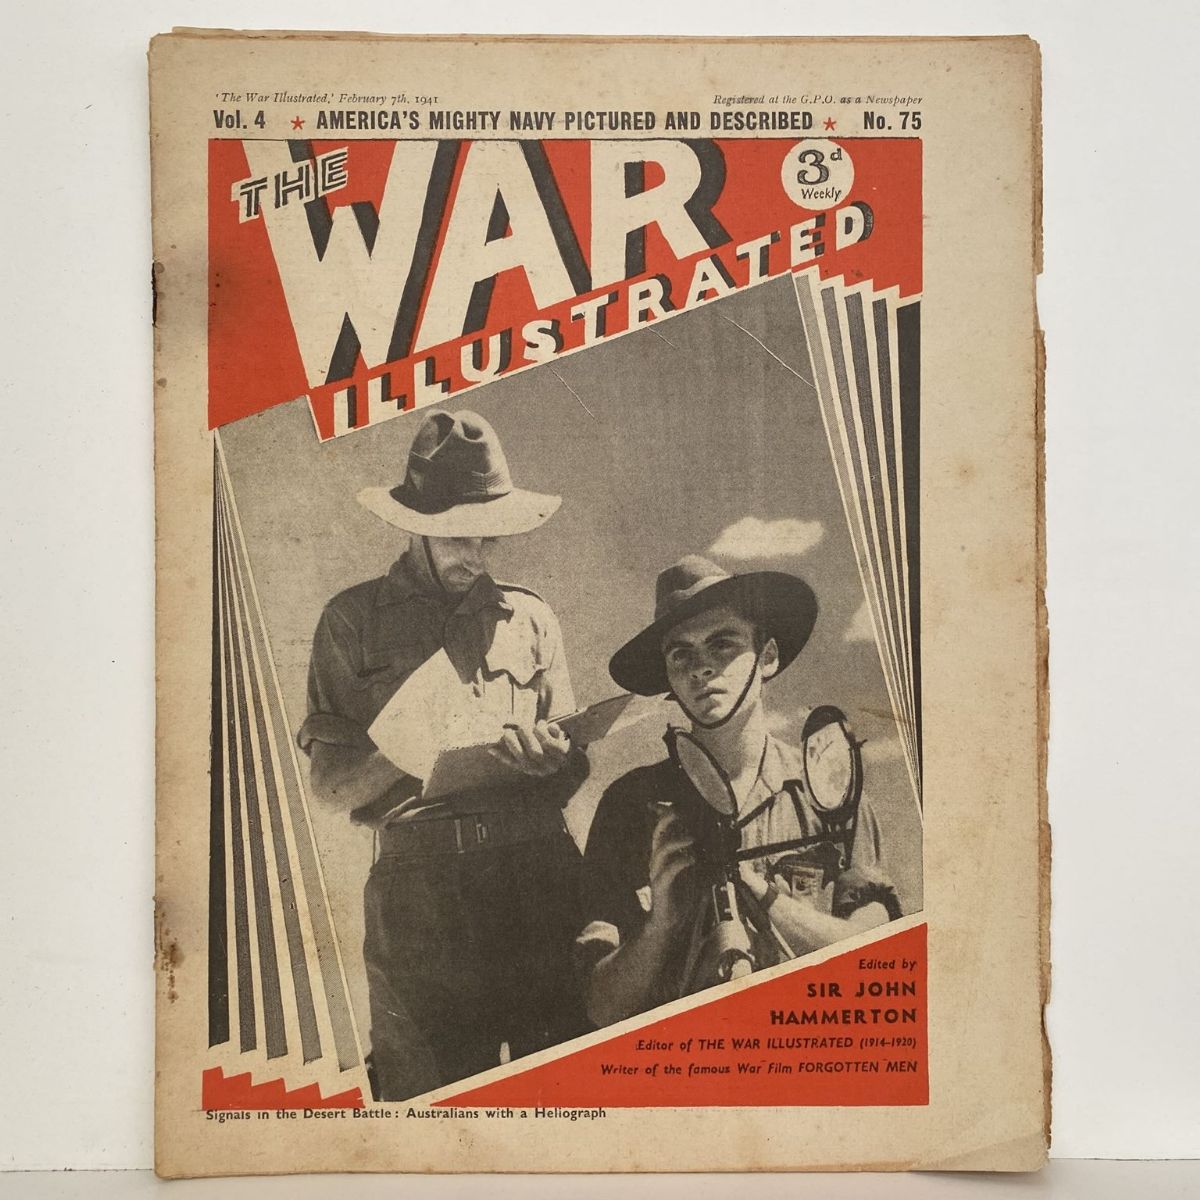 THE WAR ILLUSTRATED - Vol 4, No 75, 7th Feb 1941